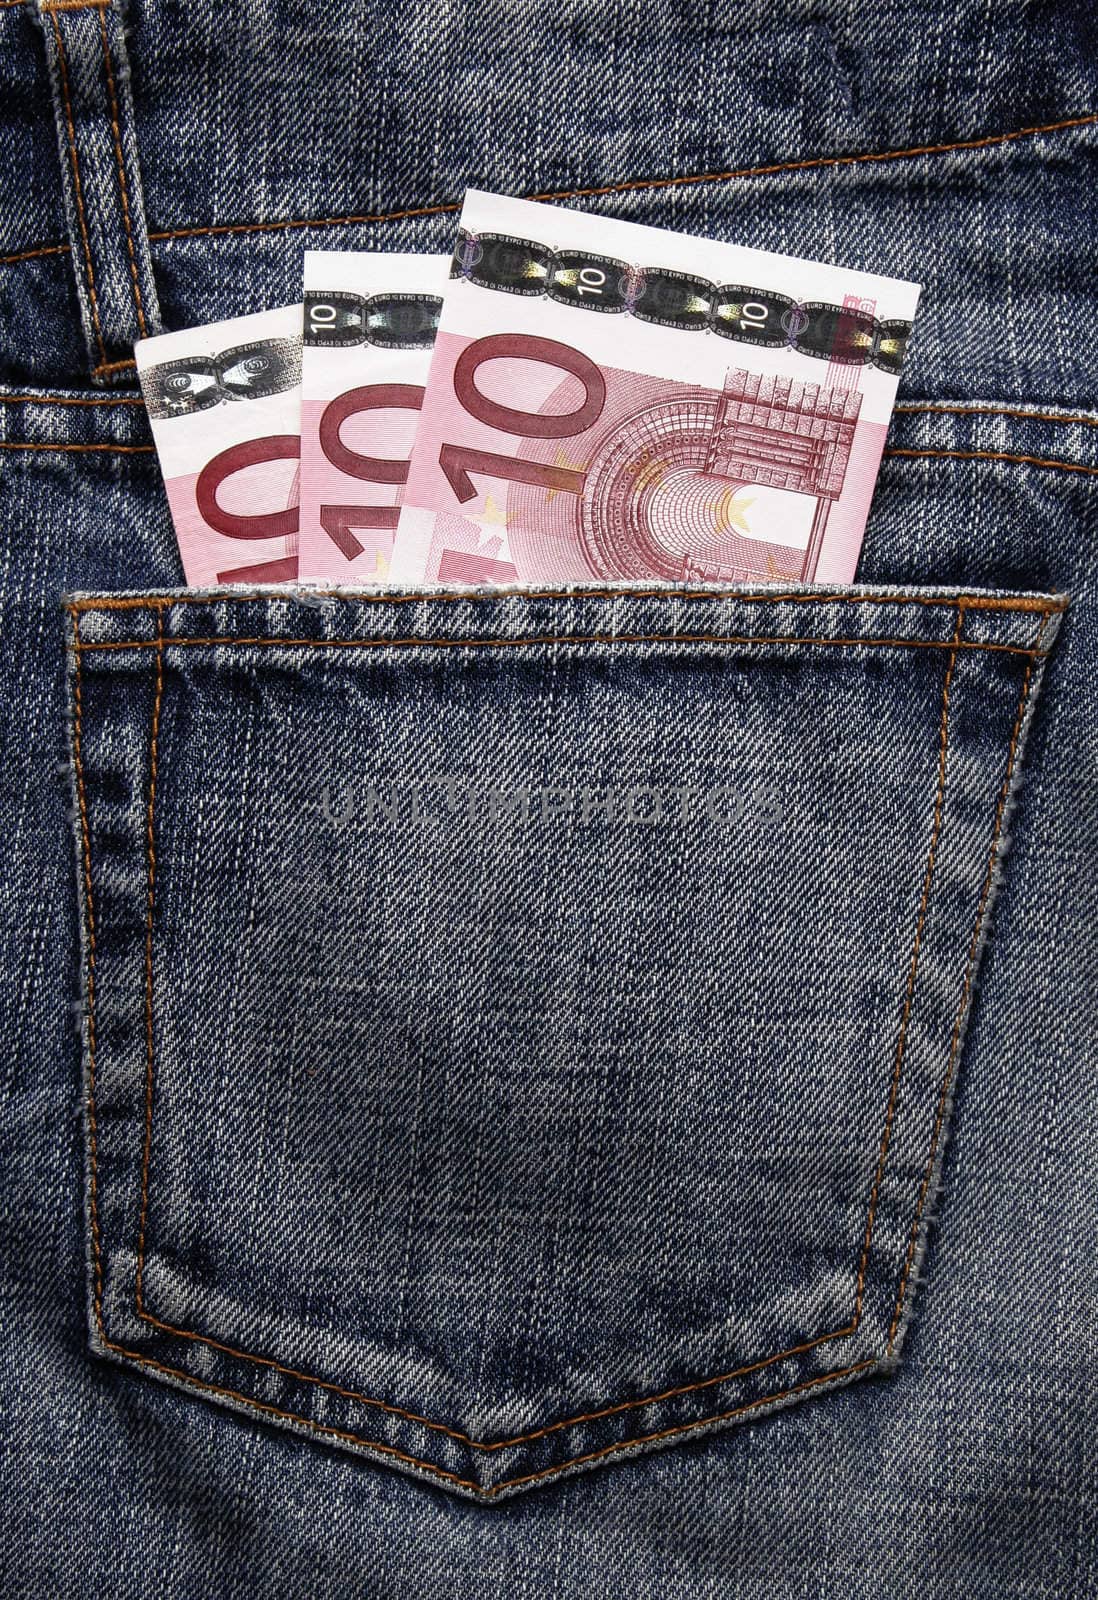 Pocket Money In Blue Jeans - Three Ten Euro Notes